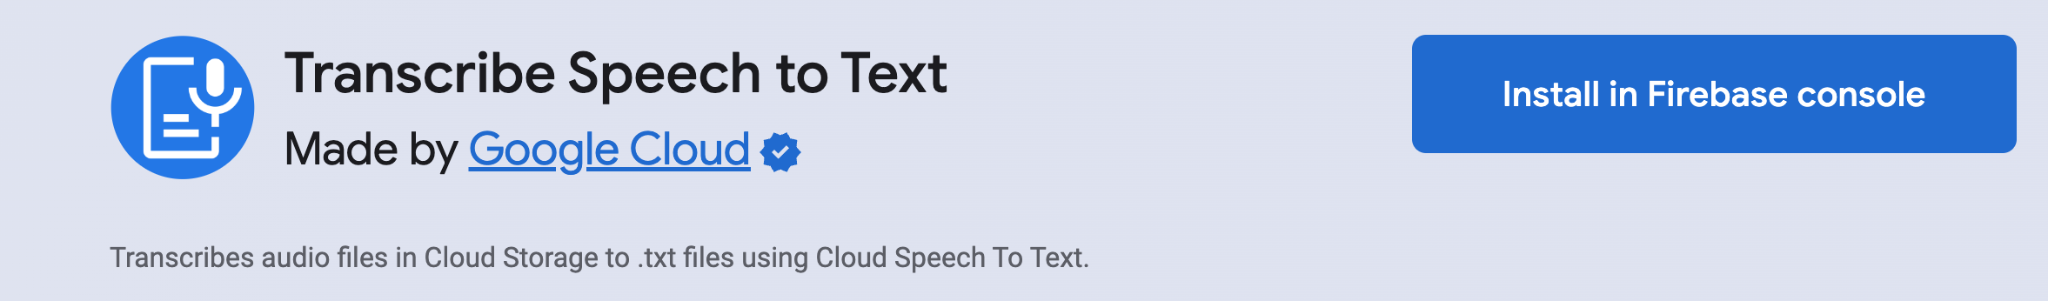 Install Transcribe speech to text via Firebase console